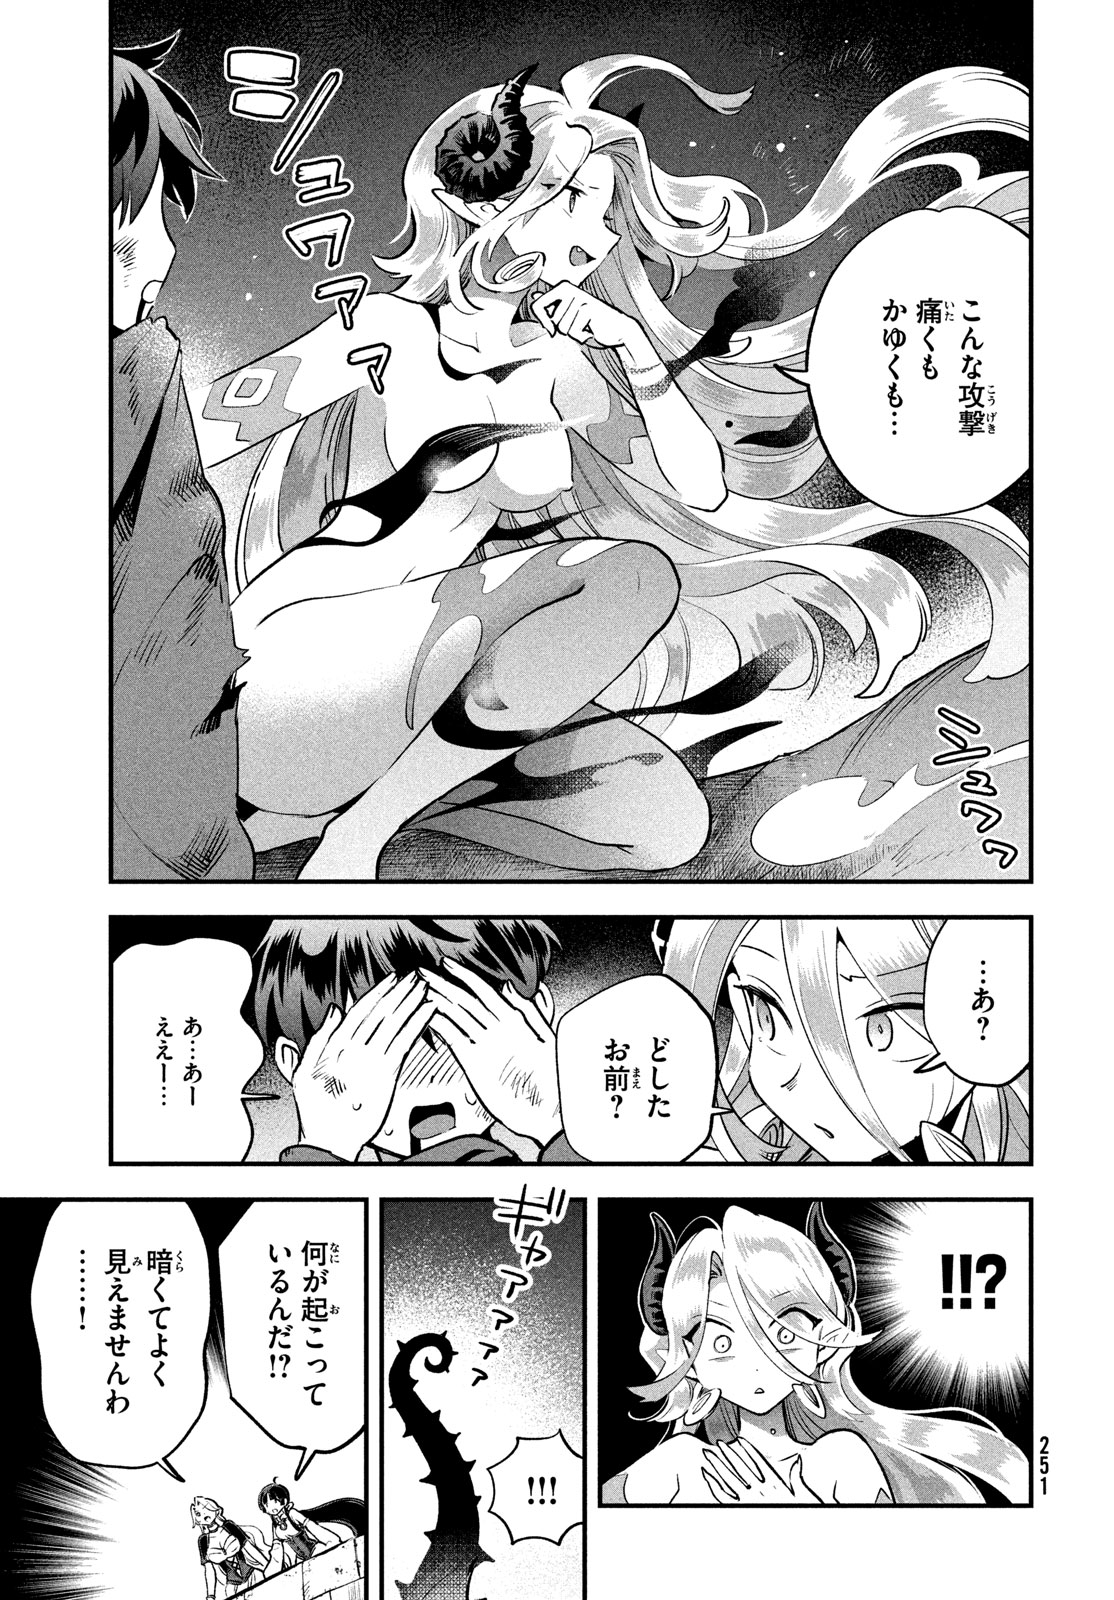 7-nin no Nemuri Hime - Chapter 47 - Page 11